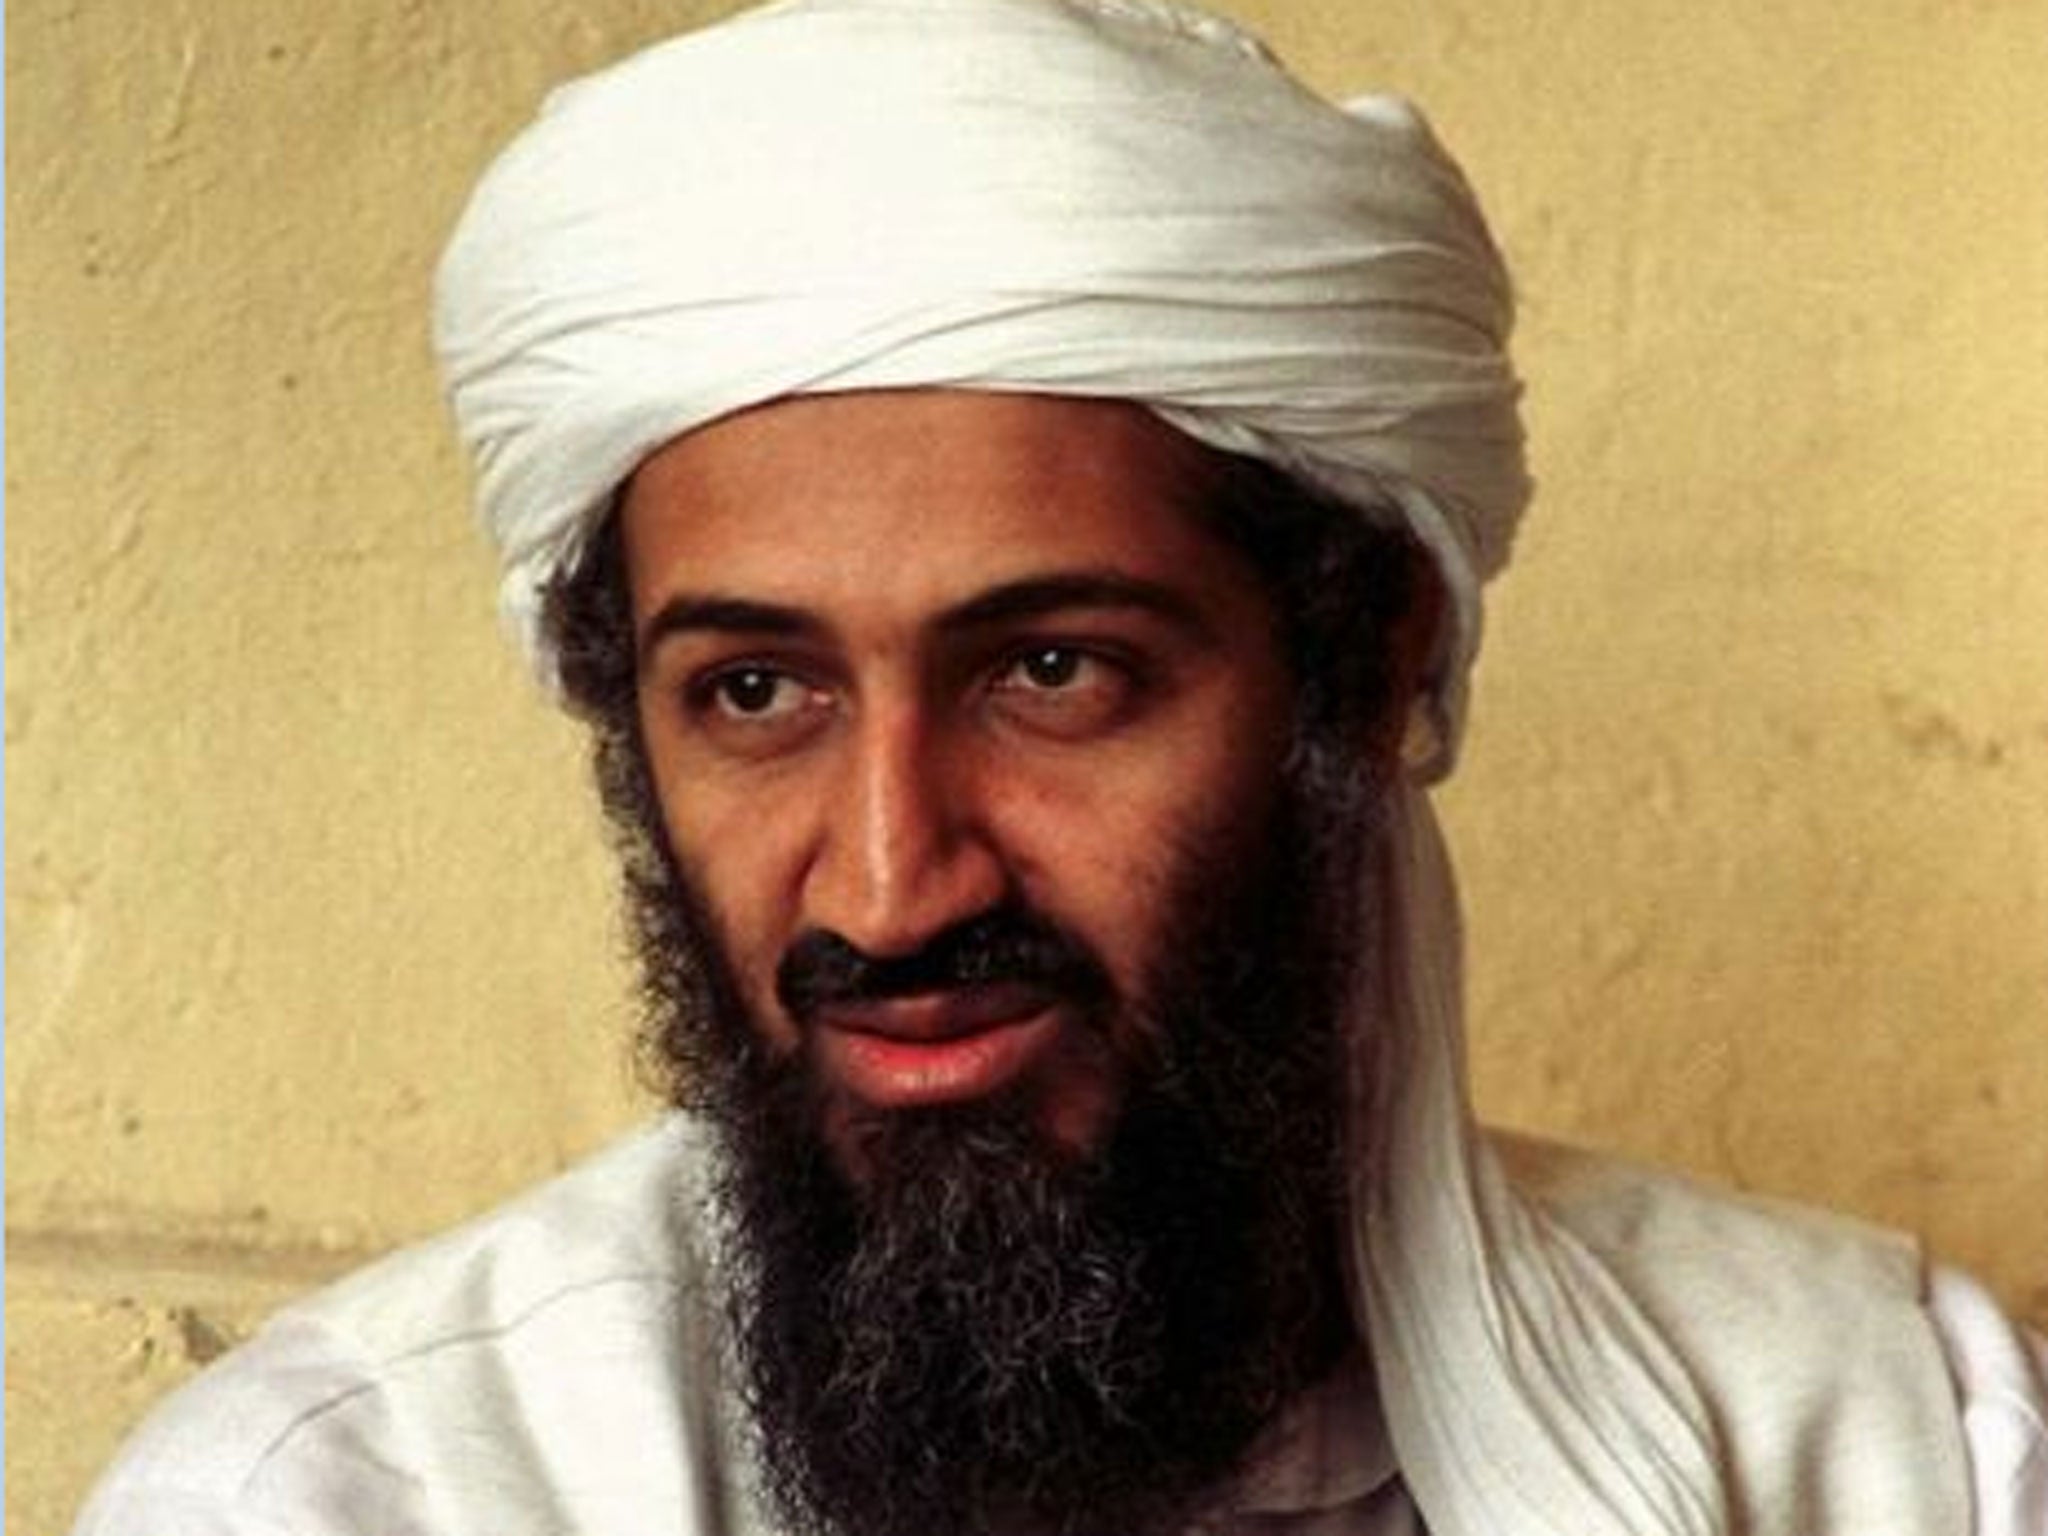 Bin Laden's death has contradictory accounts